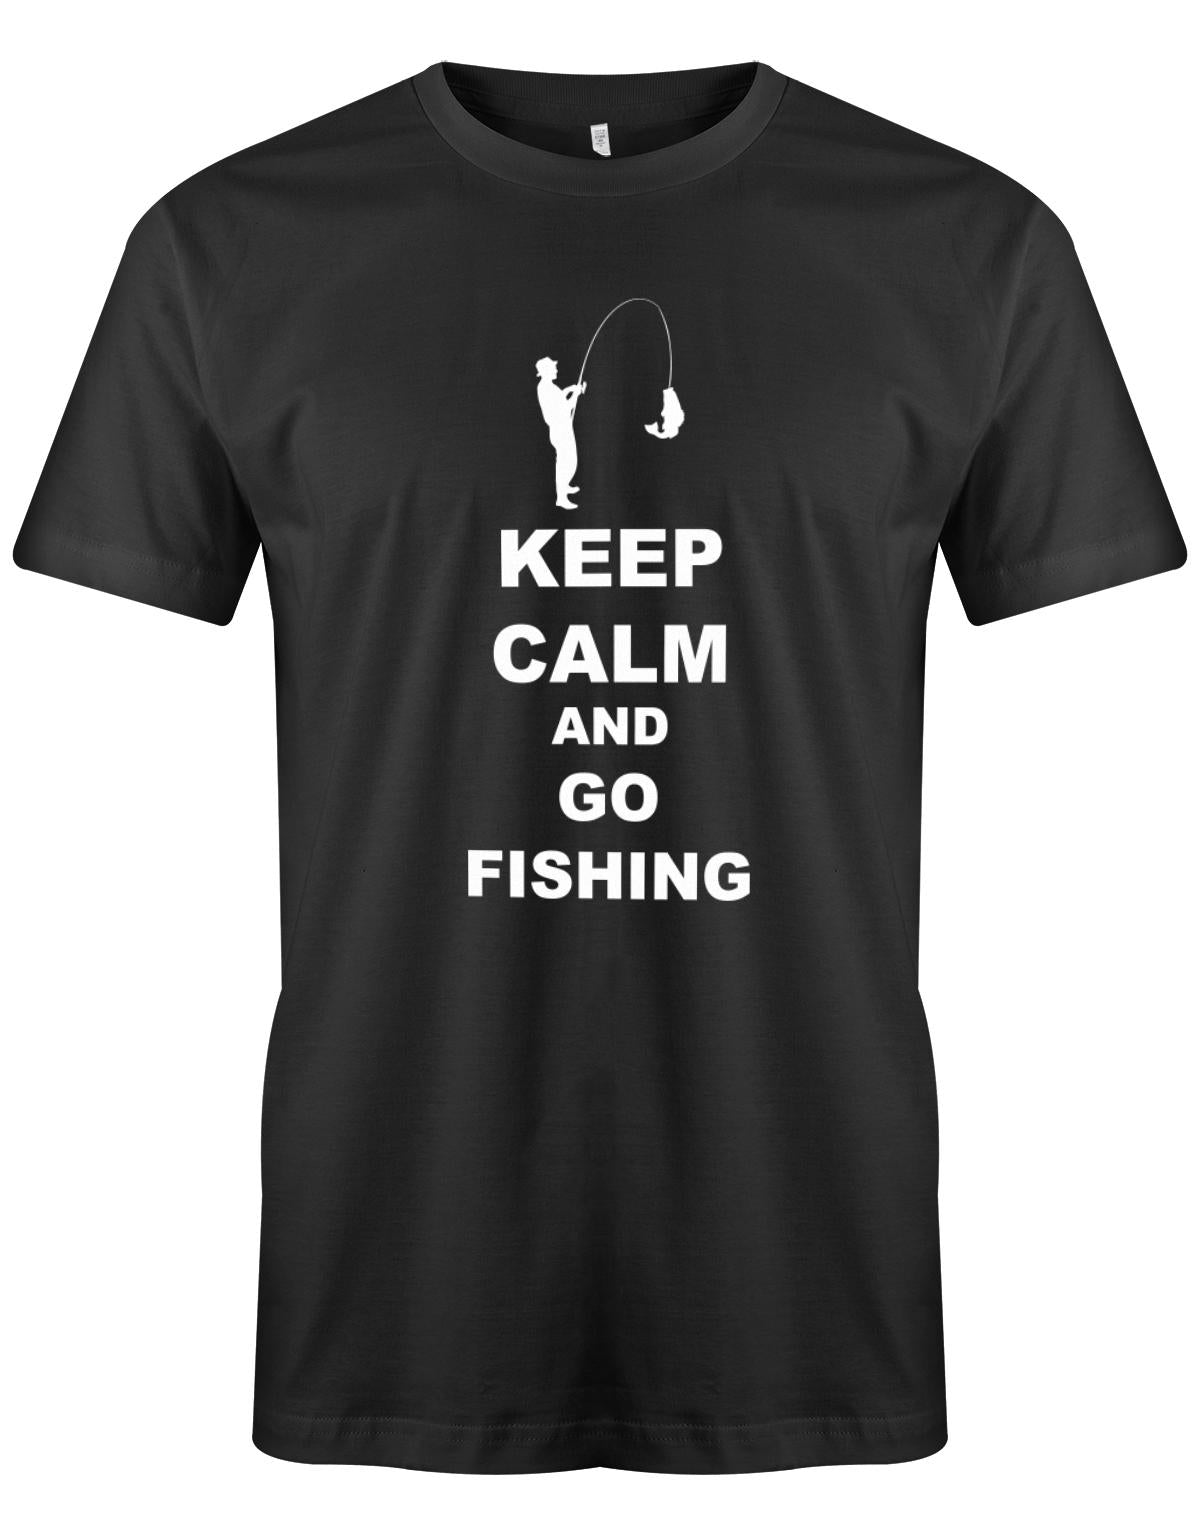 Keep-Calm-and-go-Fishing-herren-Shirt-Schwarz